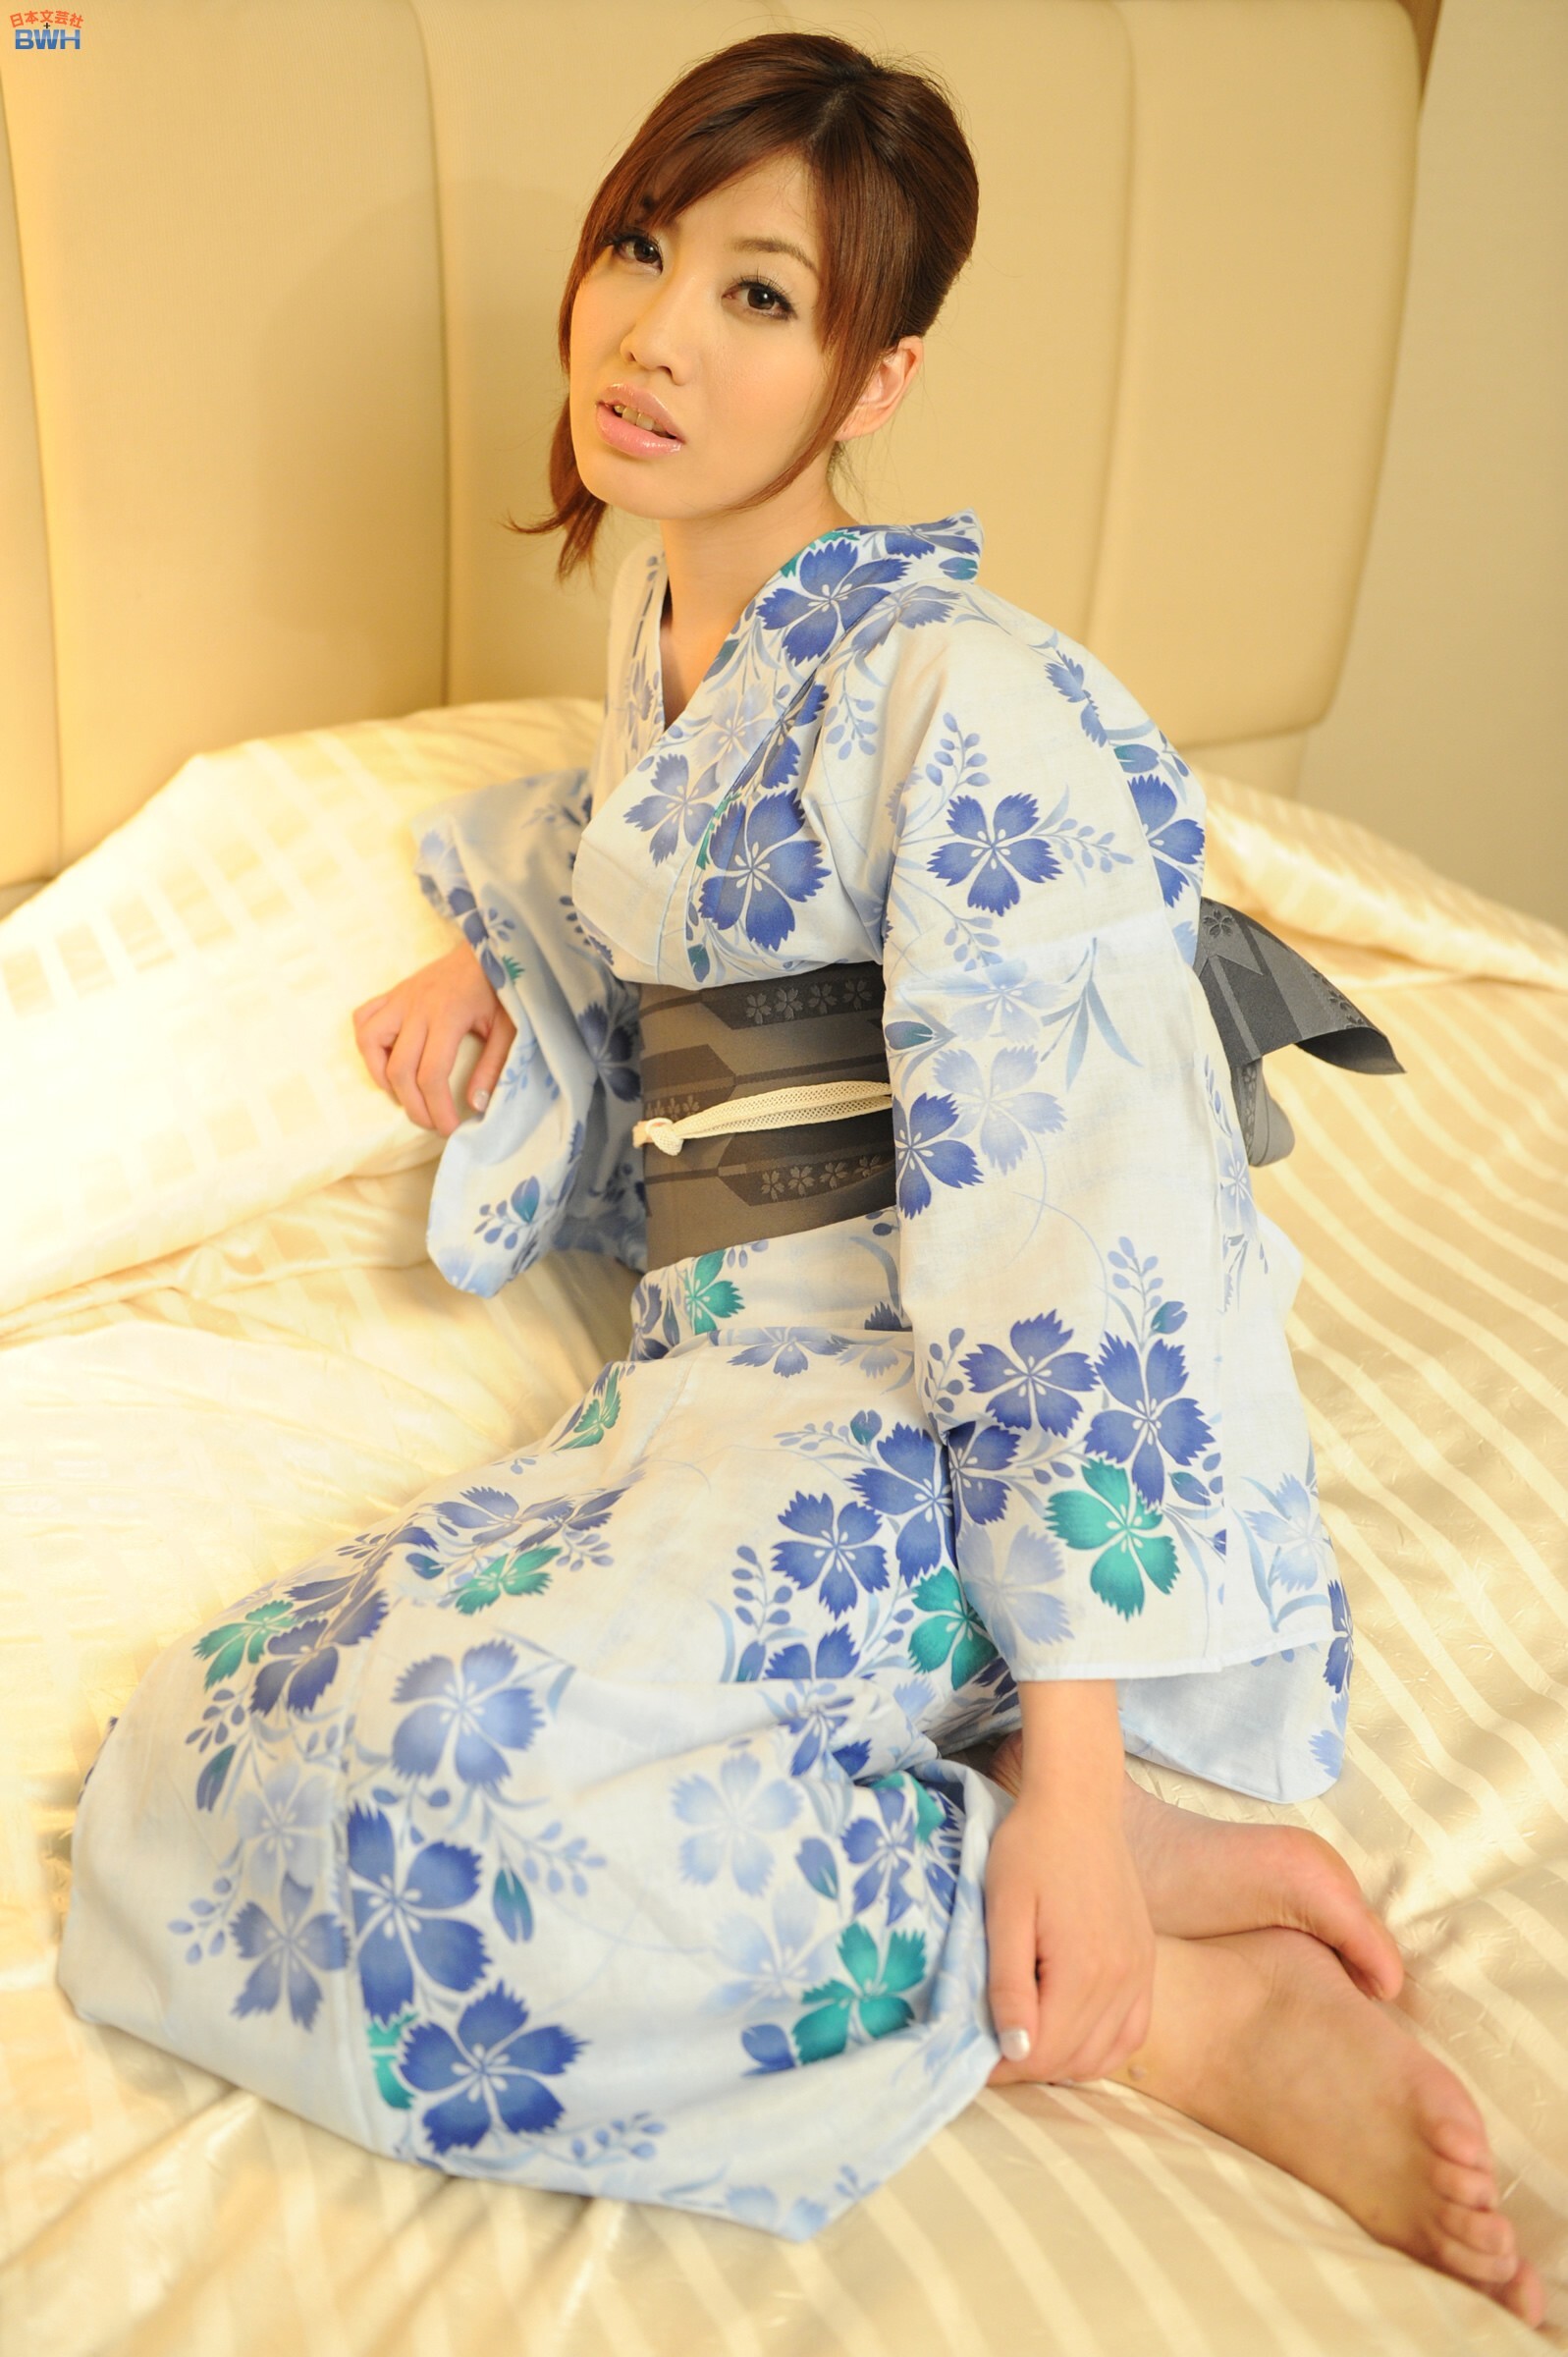 A Japanese uniform beauty woman